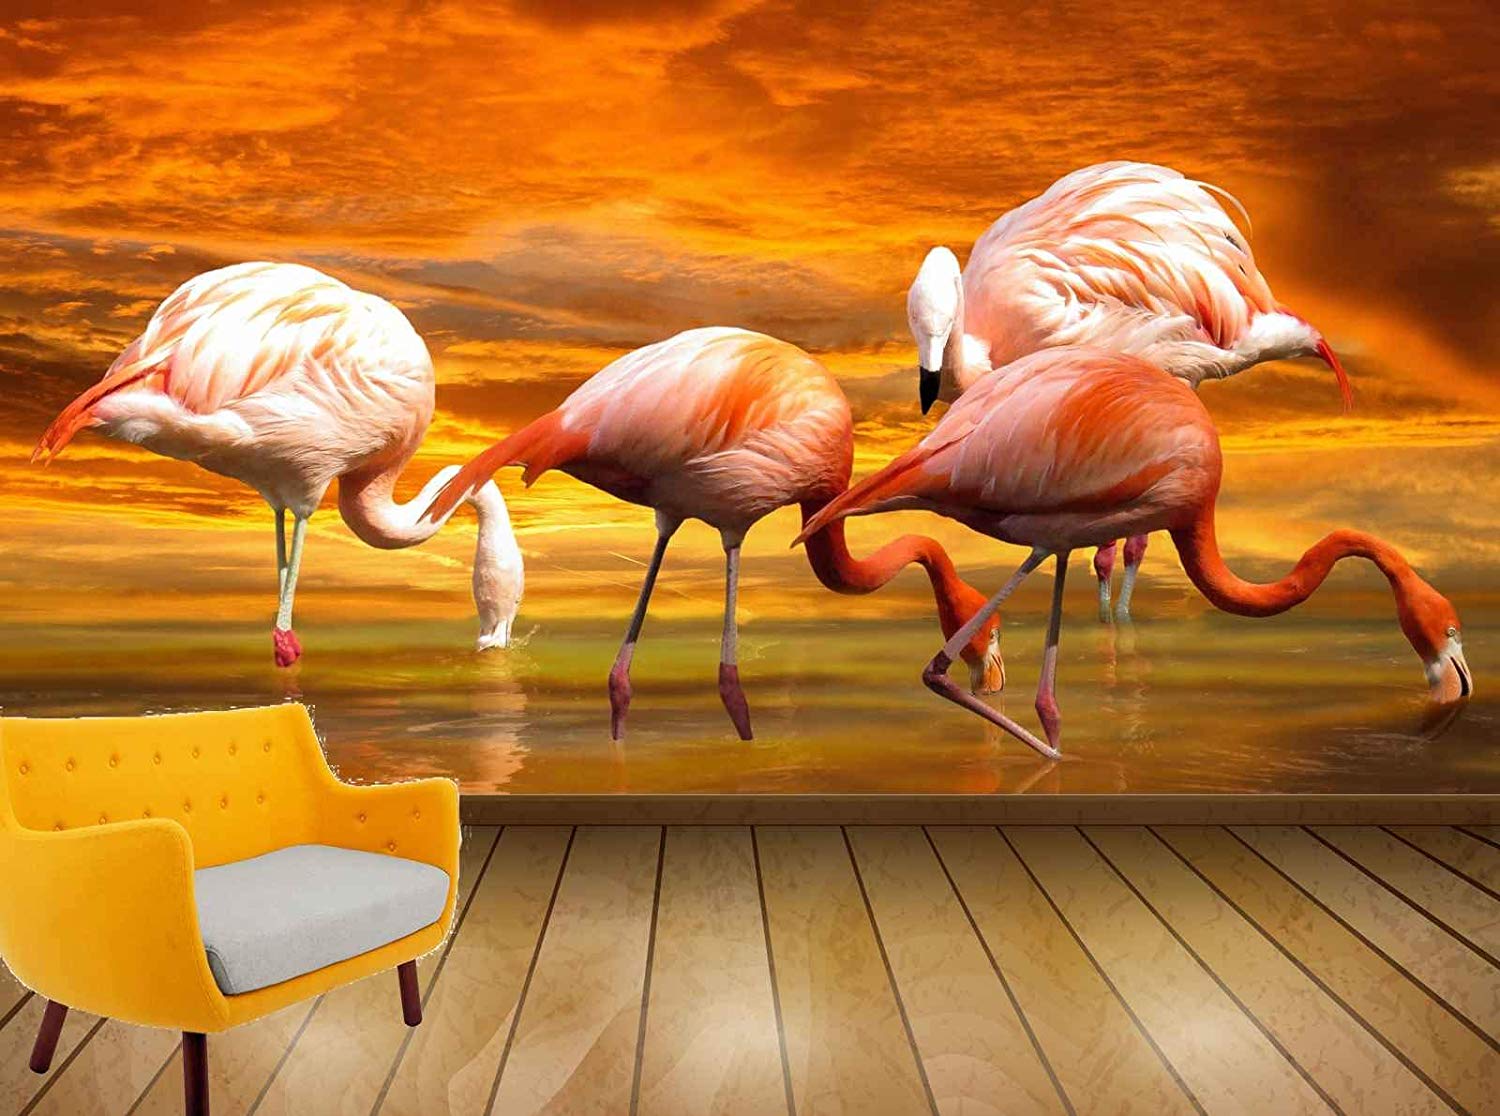 Digital Painting On Animal - HD Wallpaper 